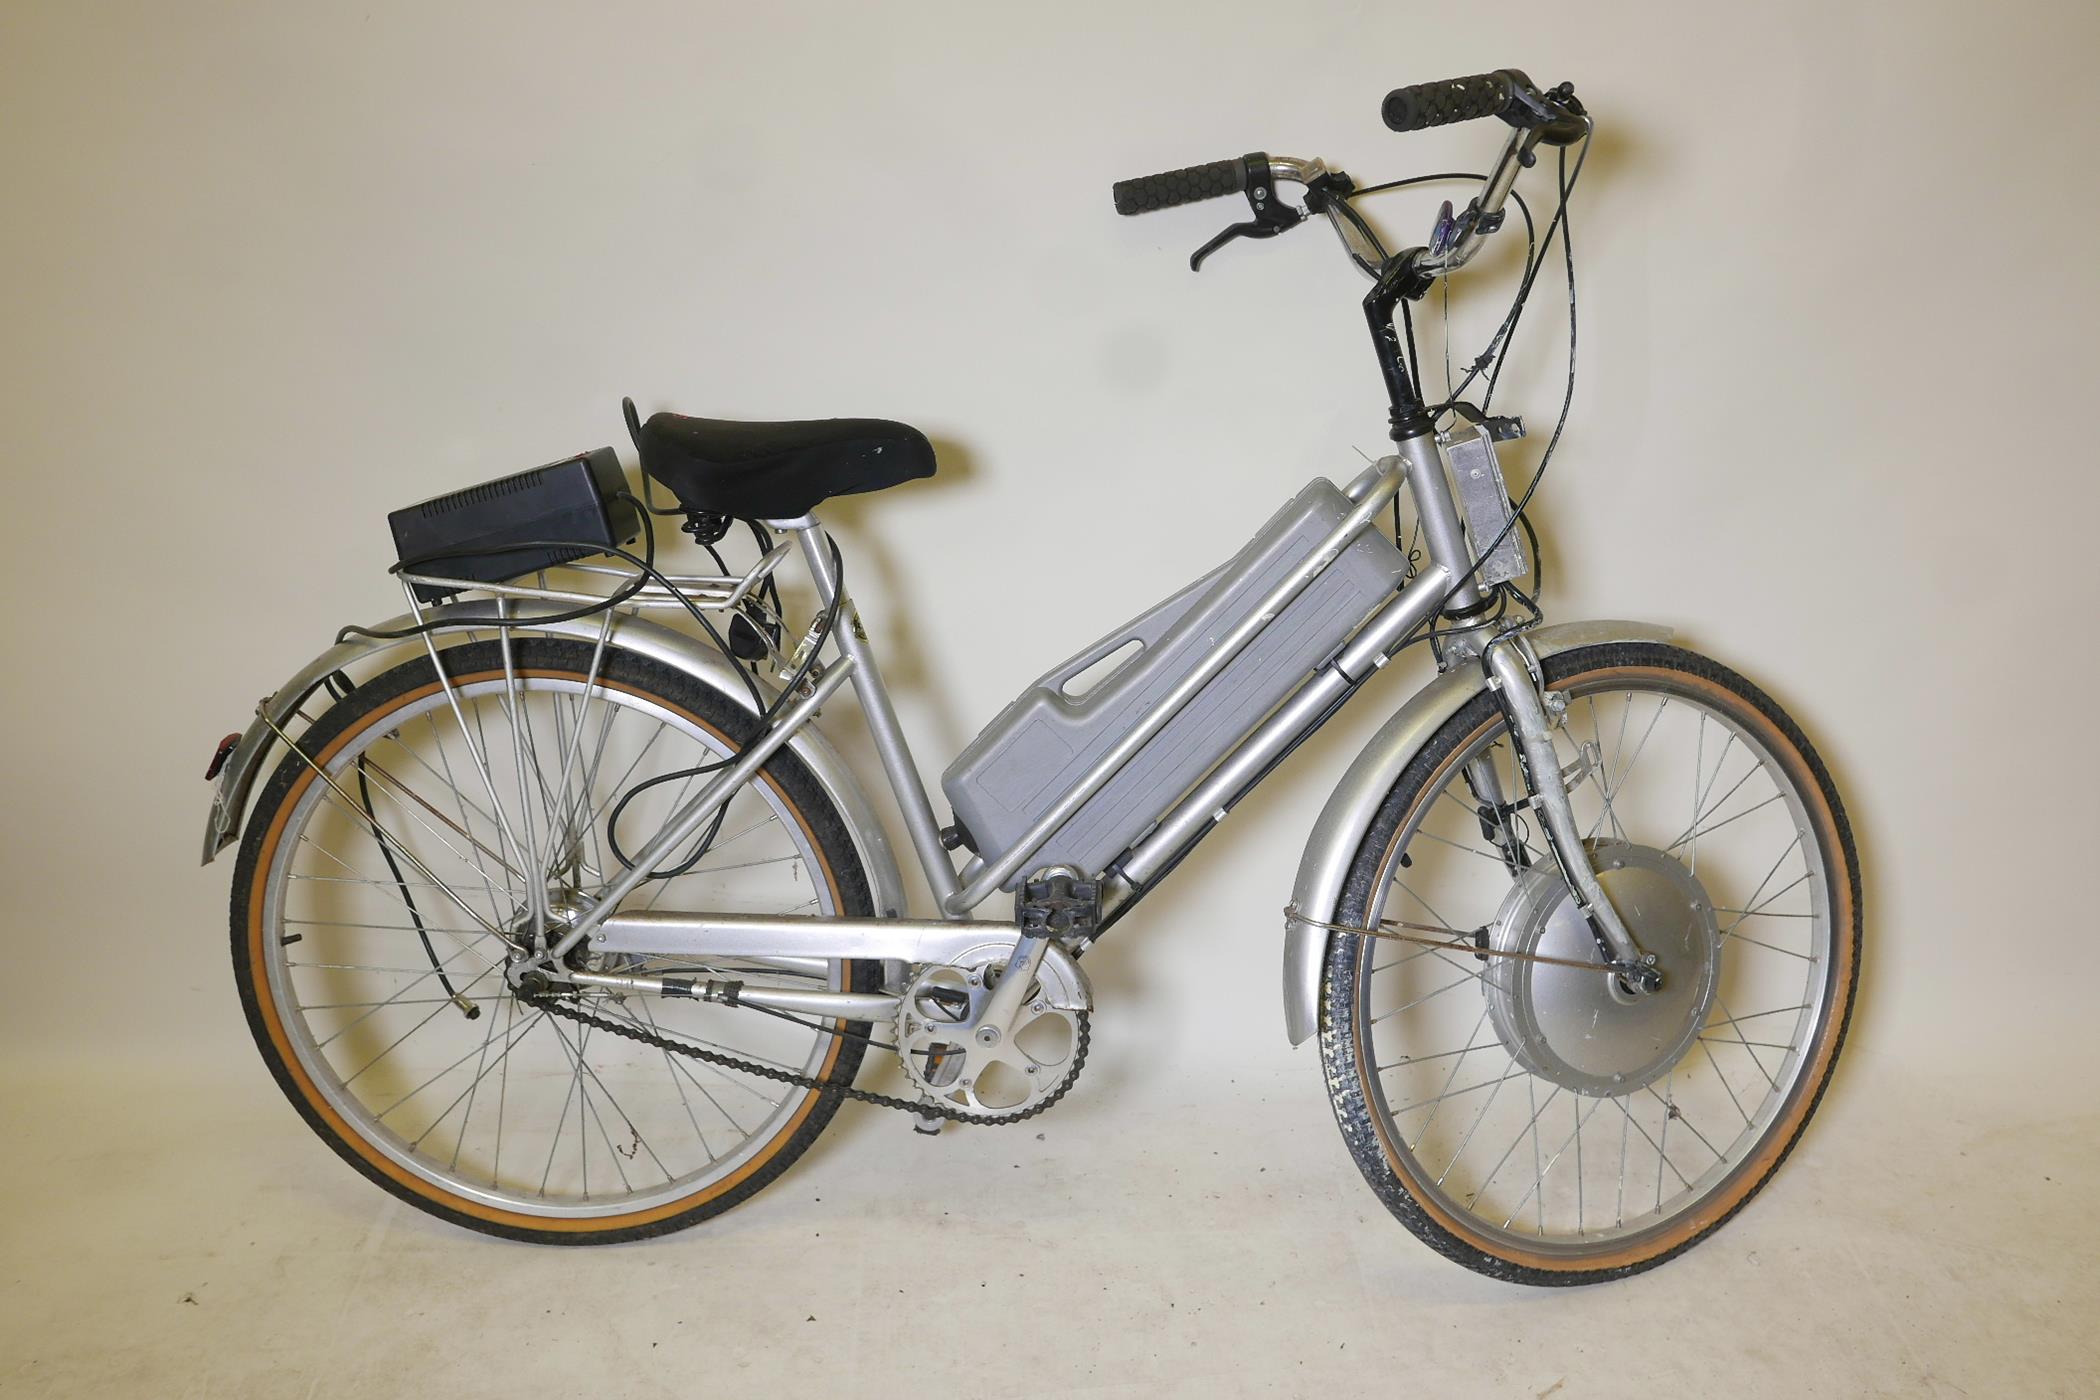 An 'Elebike' rechargeable electric bike, wheel 25" diameter